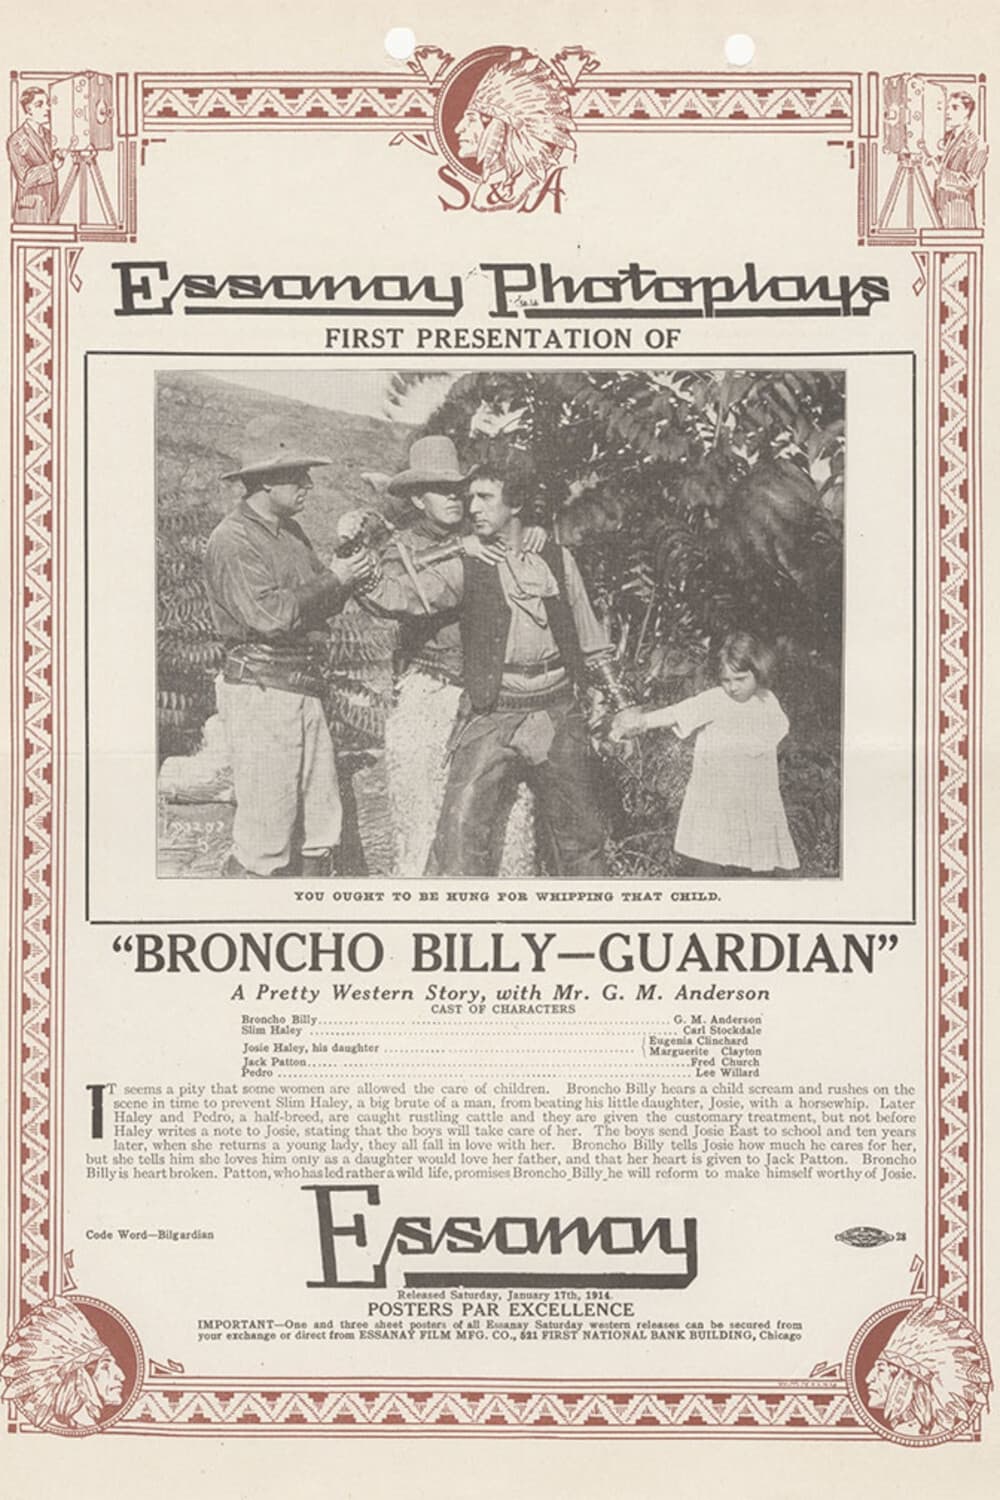 Broncho Billy-Guardian